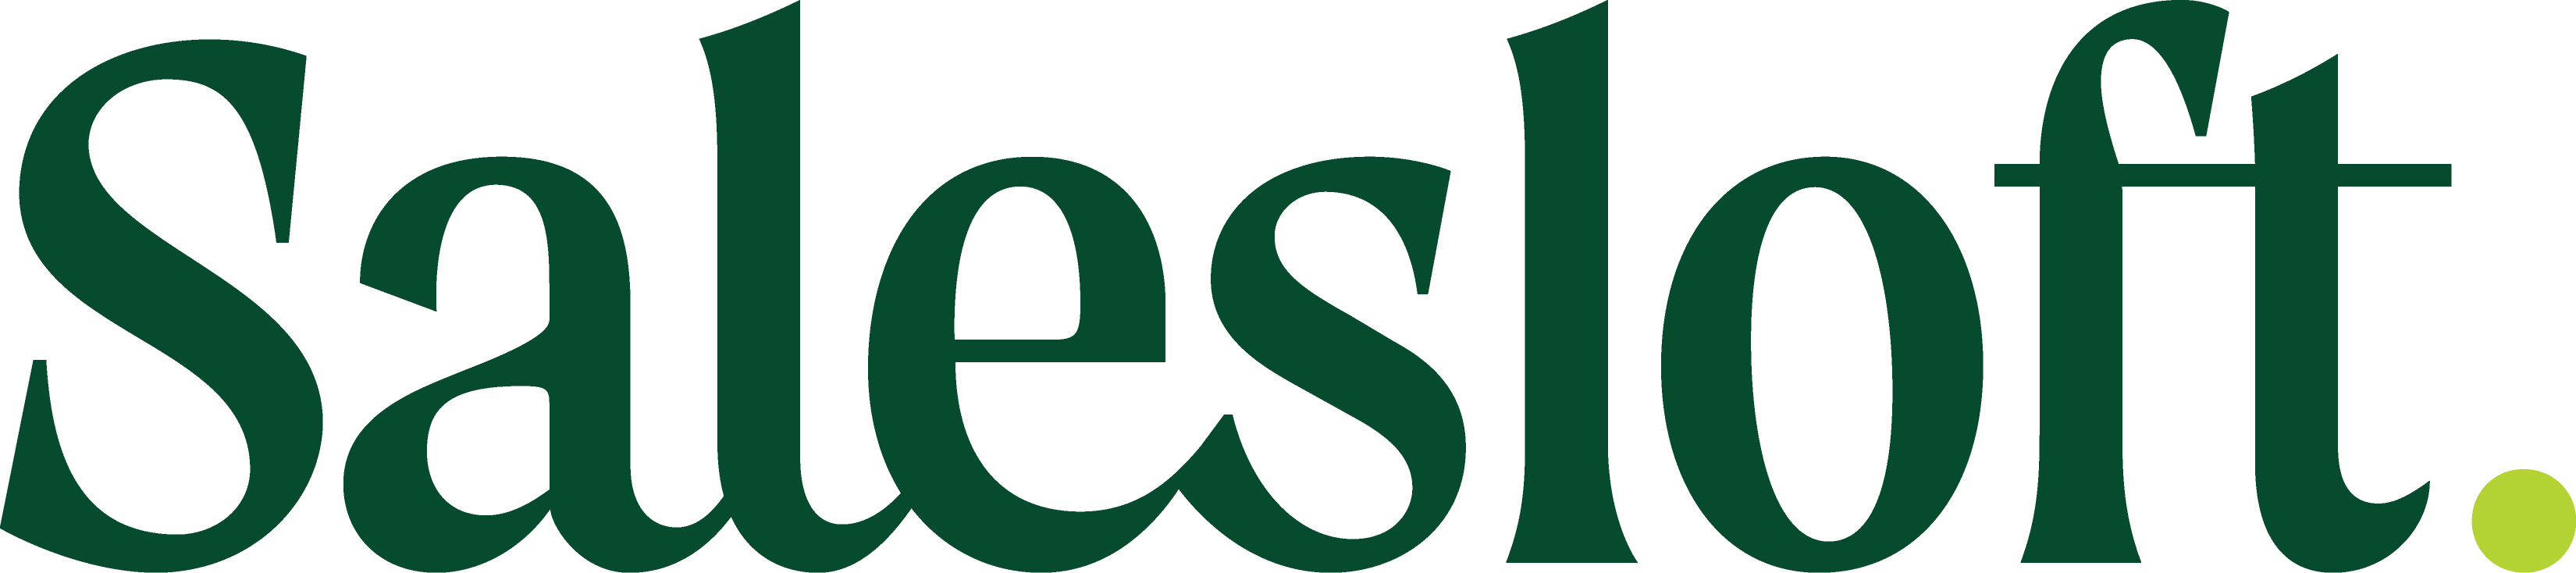 Salesloft Company Logo